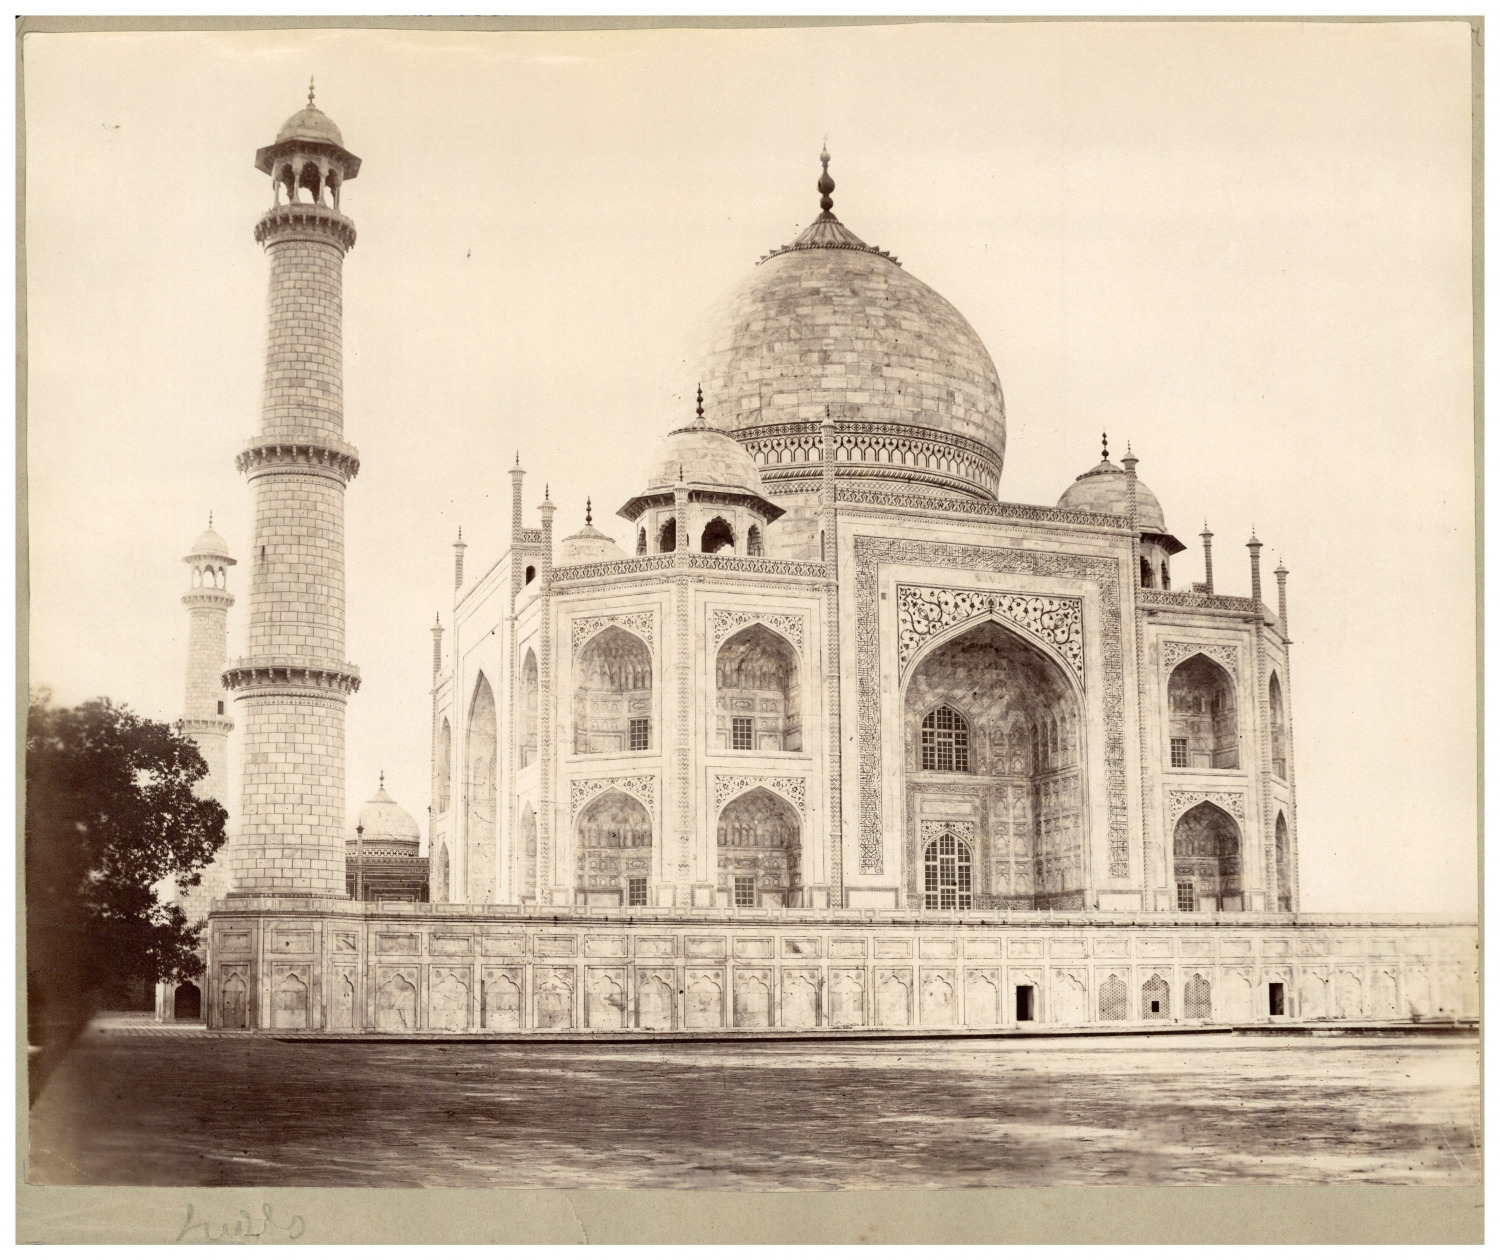 Samuel Bourne, India, Agra, Taj Mahal from the River Vintage Albumen Print. Anot